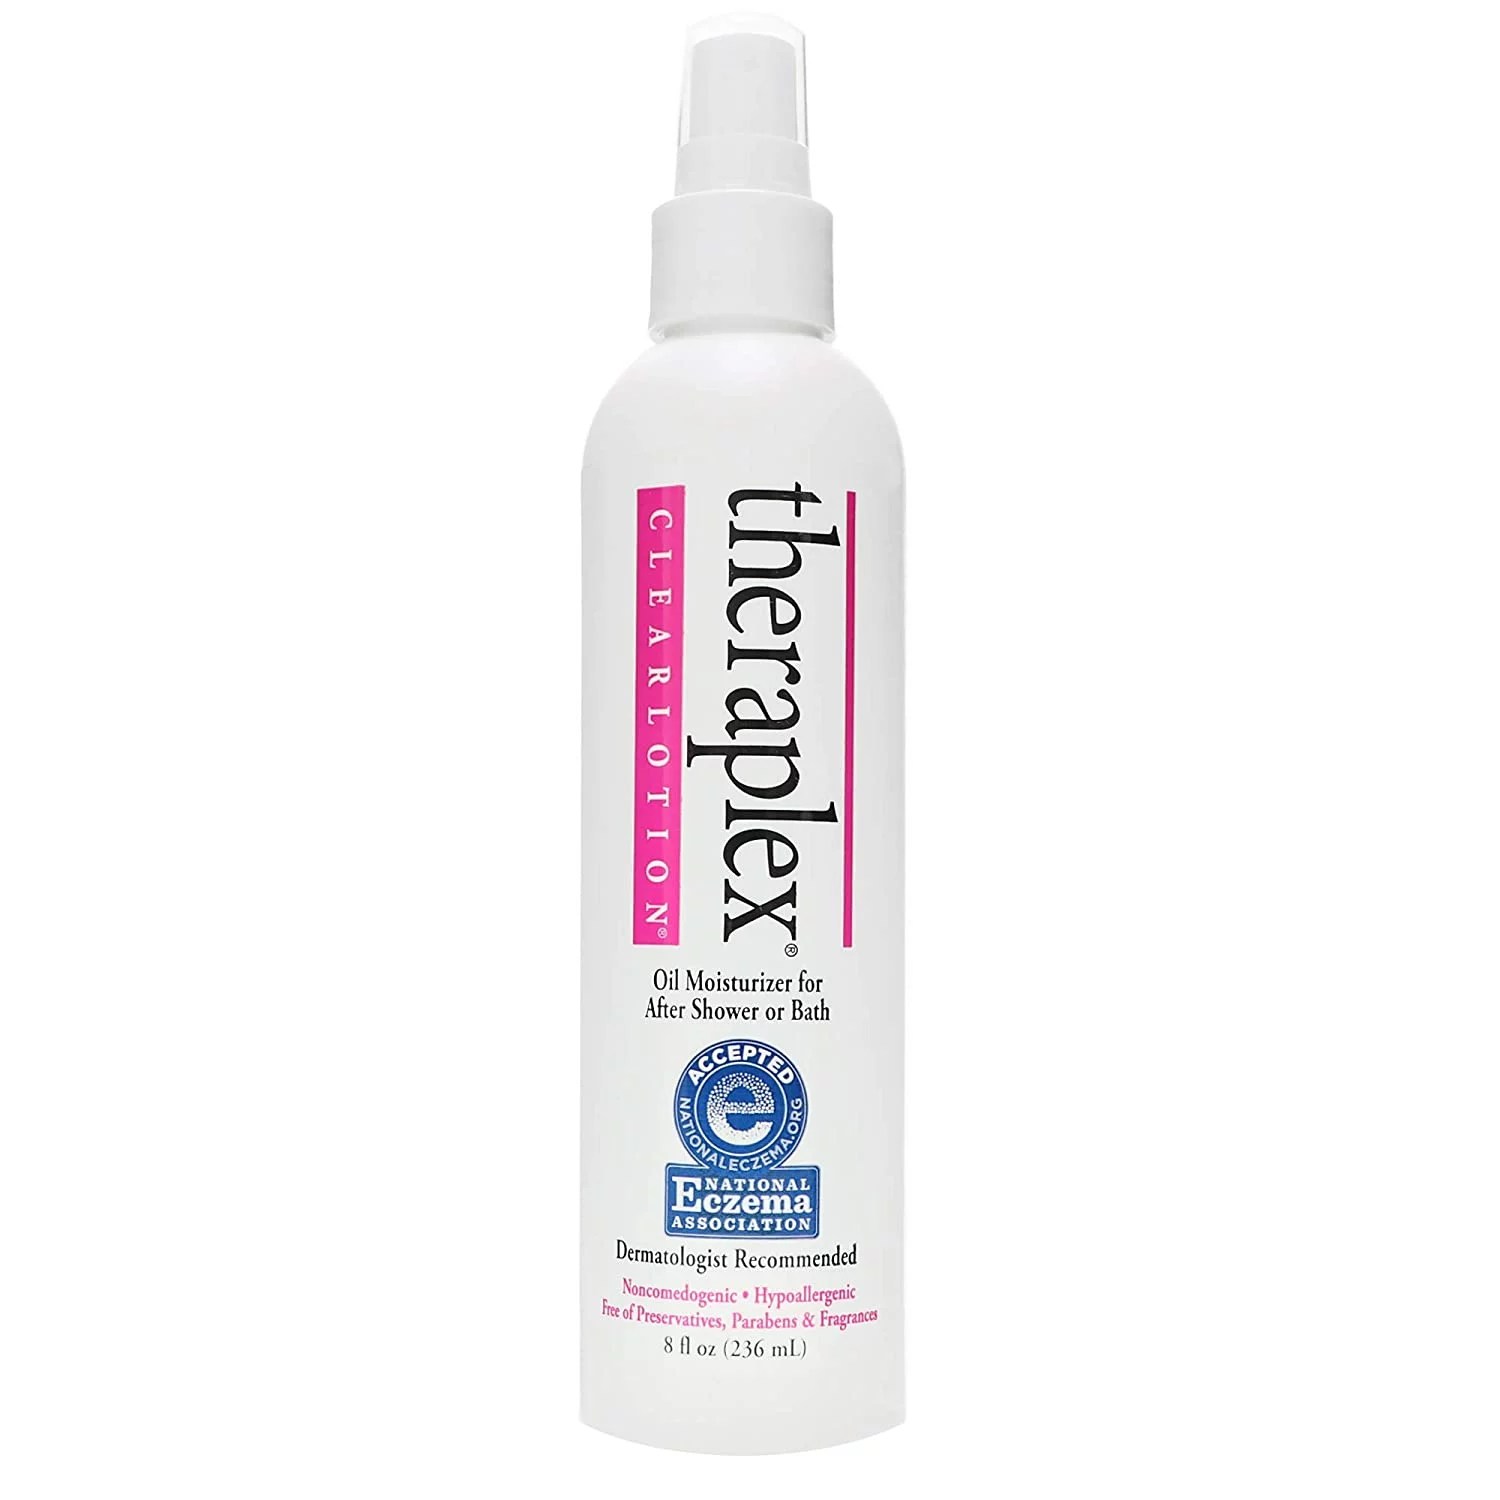 Theraplex Clear Lotion Spray